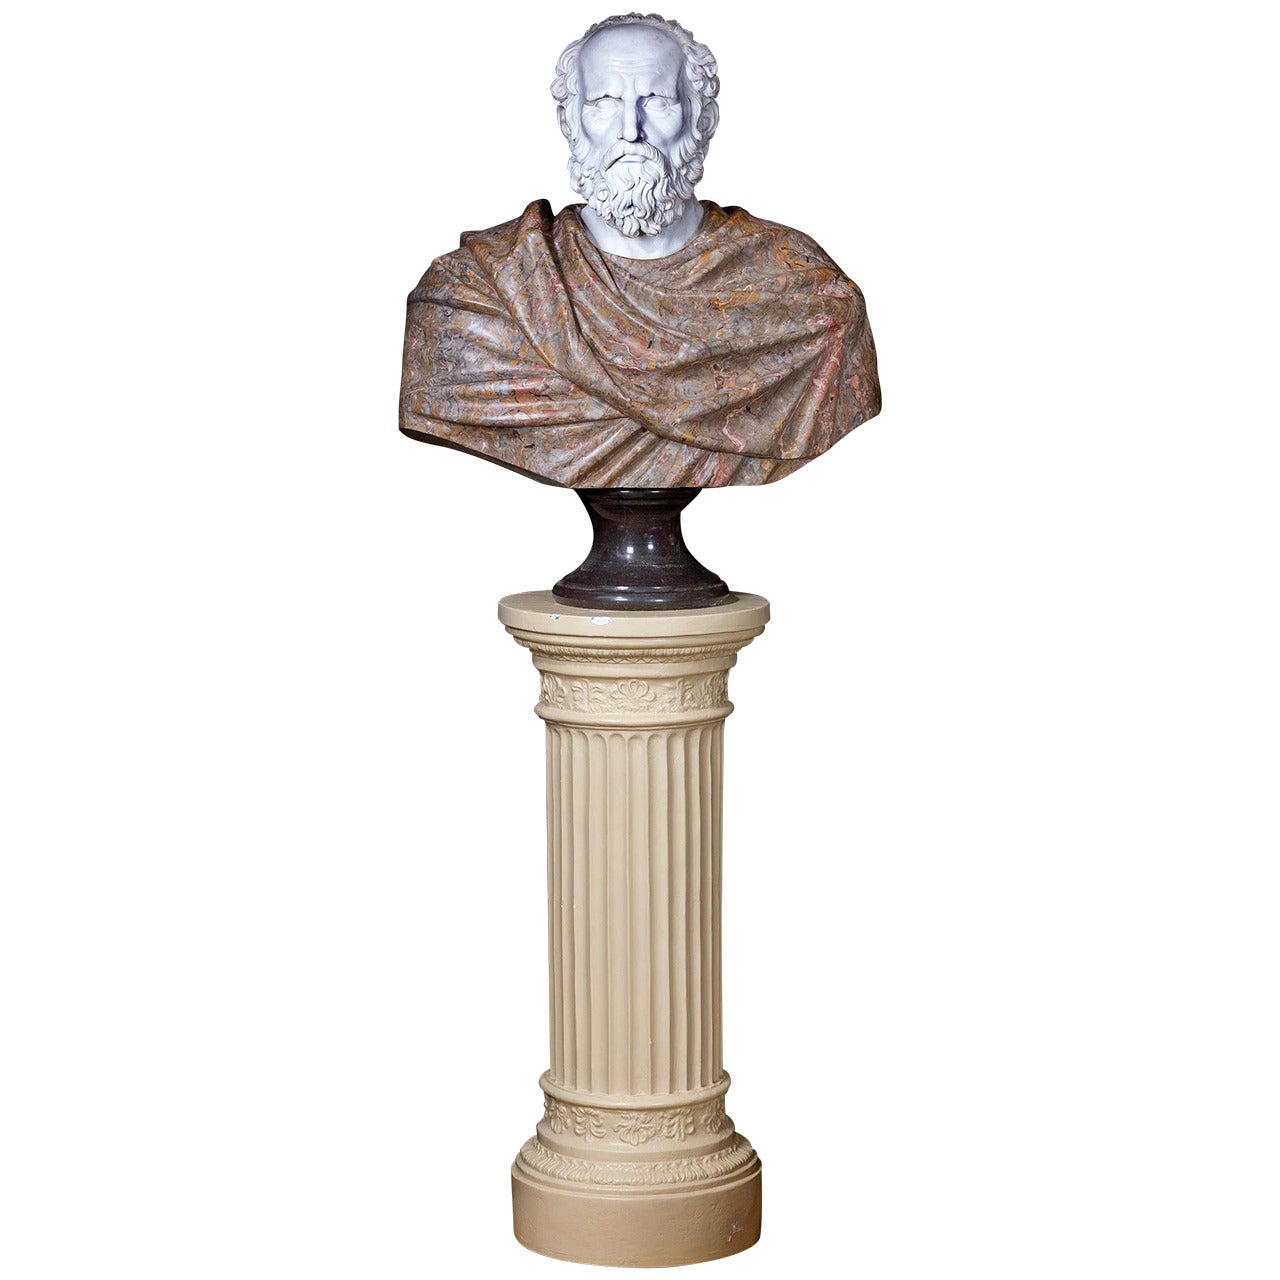 Bust of a Gentleman on a Plinth